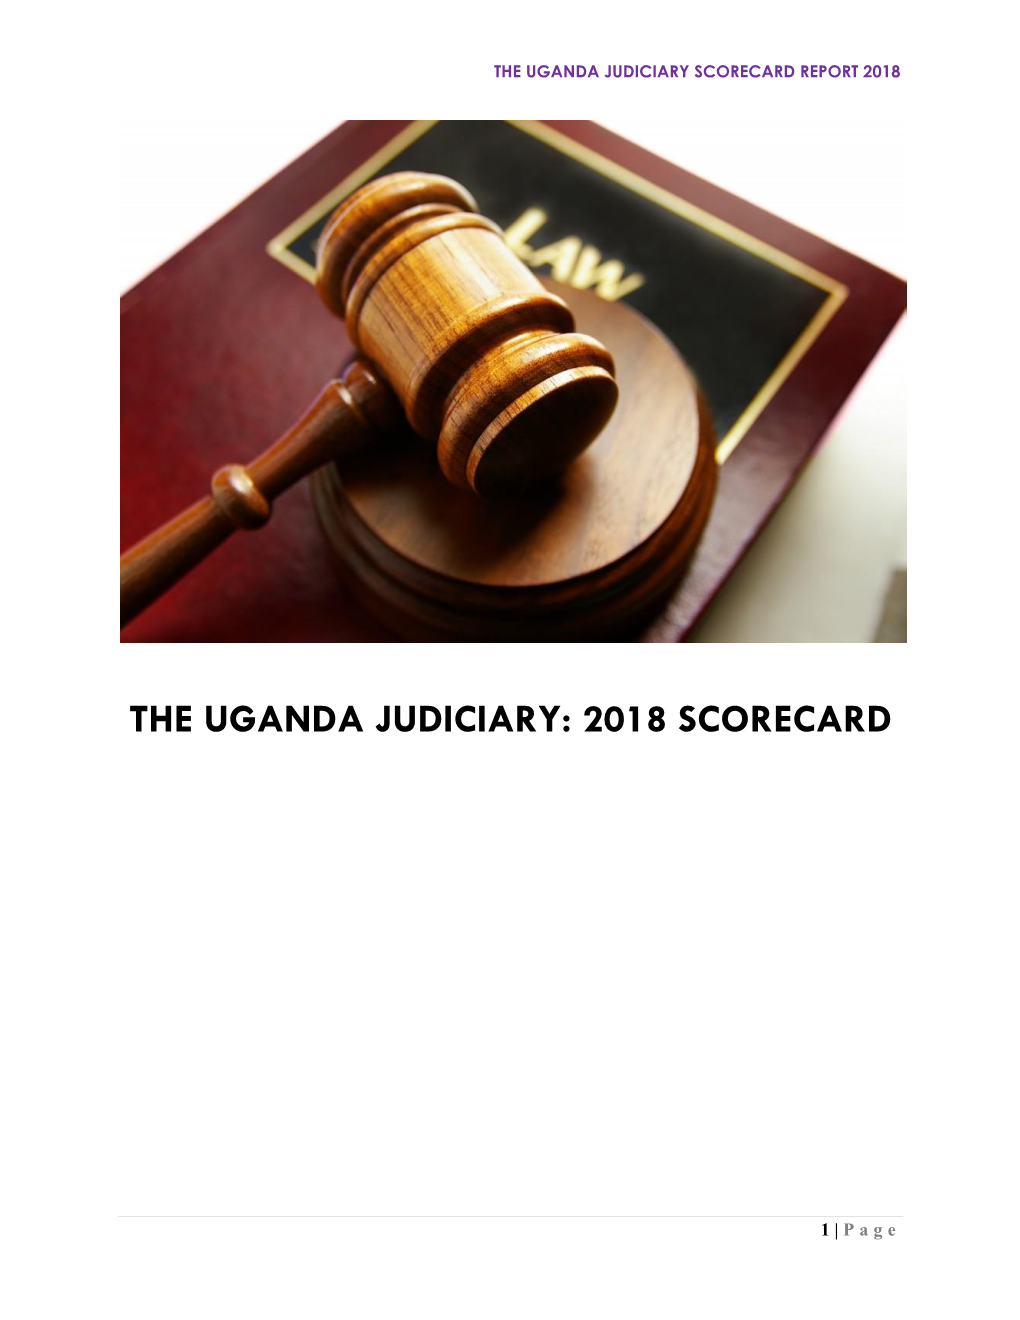 The Uganda Judiciary: 2018 Scorecard